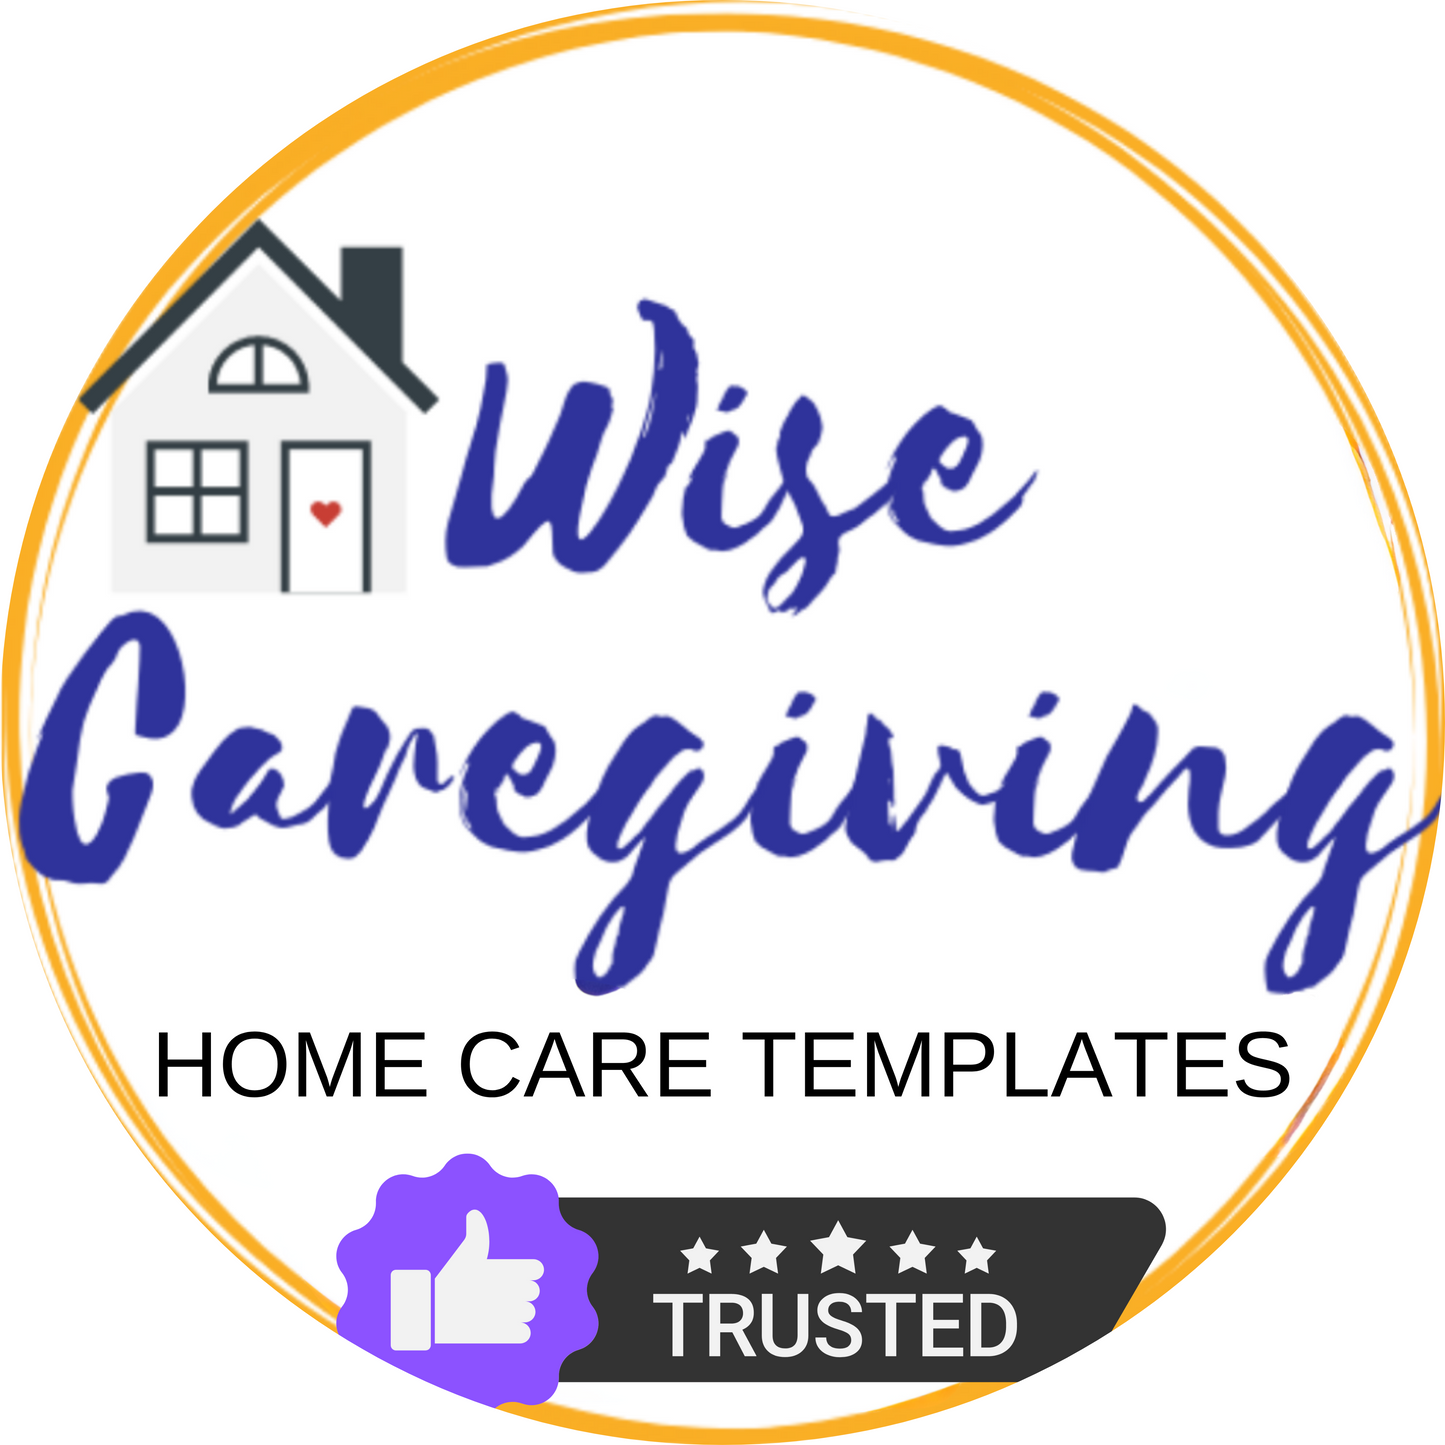 Home Care Client Satisfaction Survey Form Template